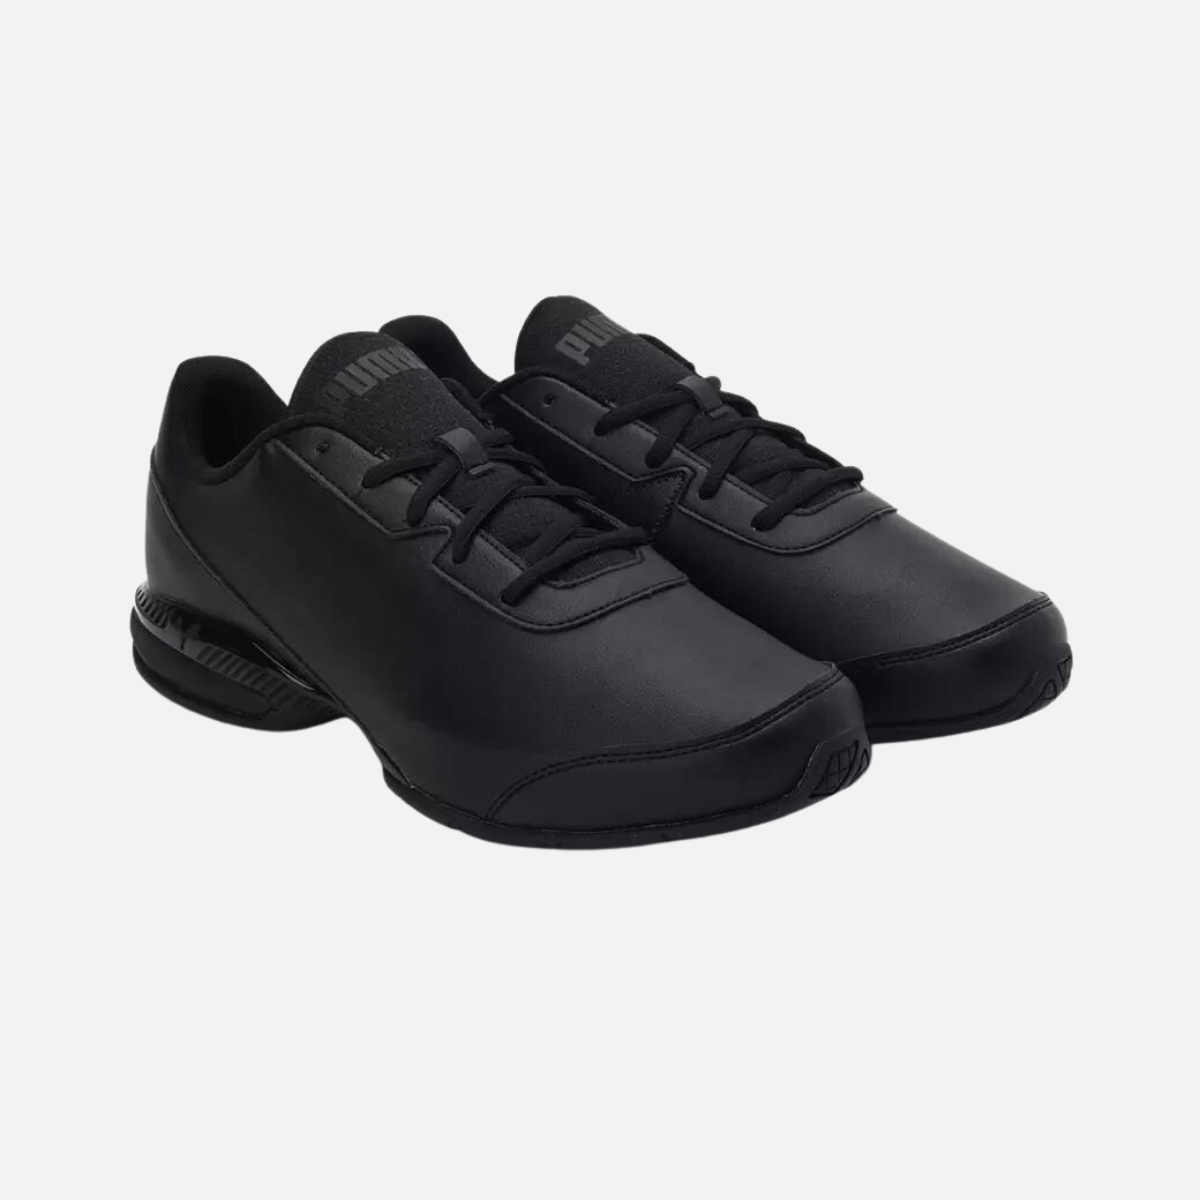 Puma Equate SL Men's Running Shoes -Black